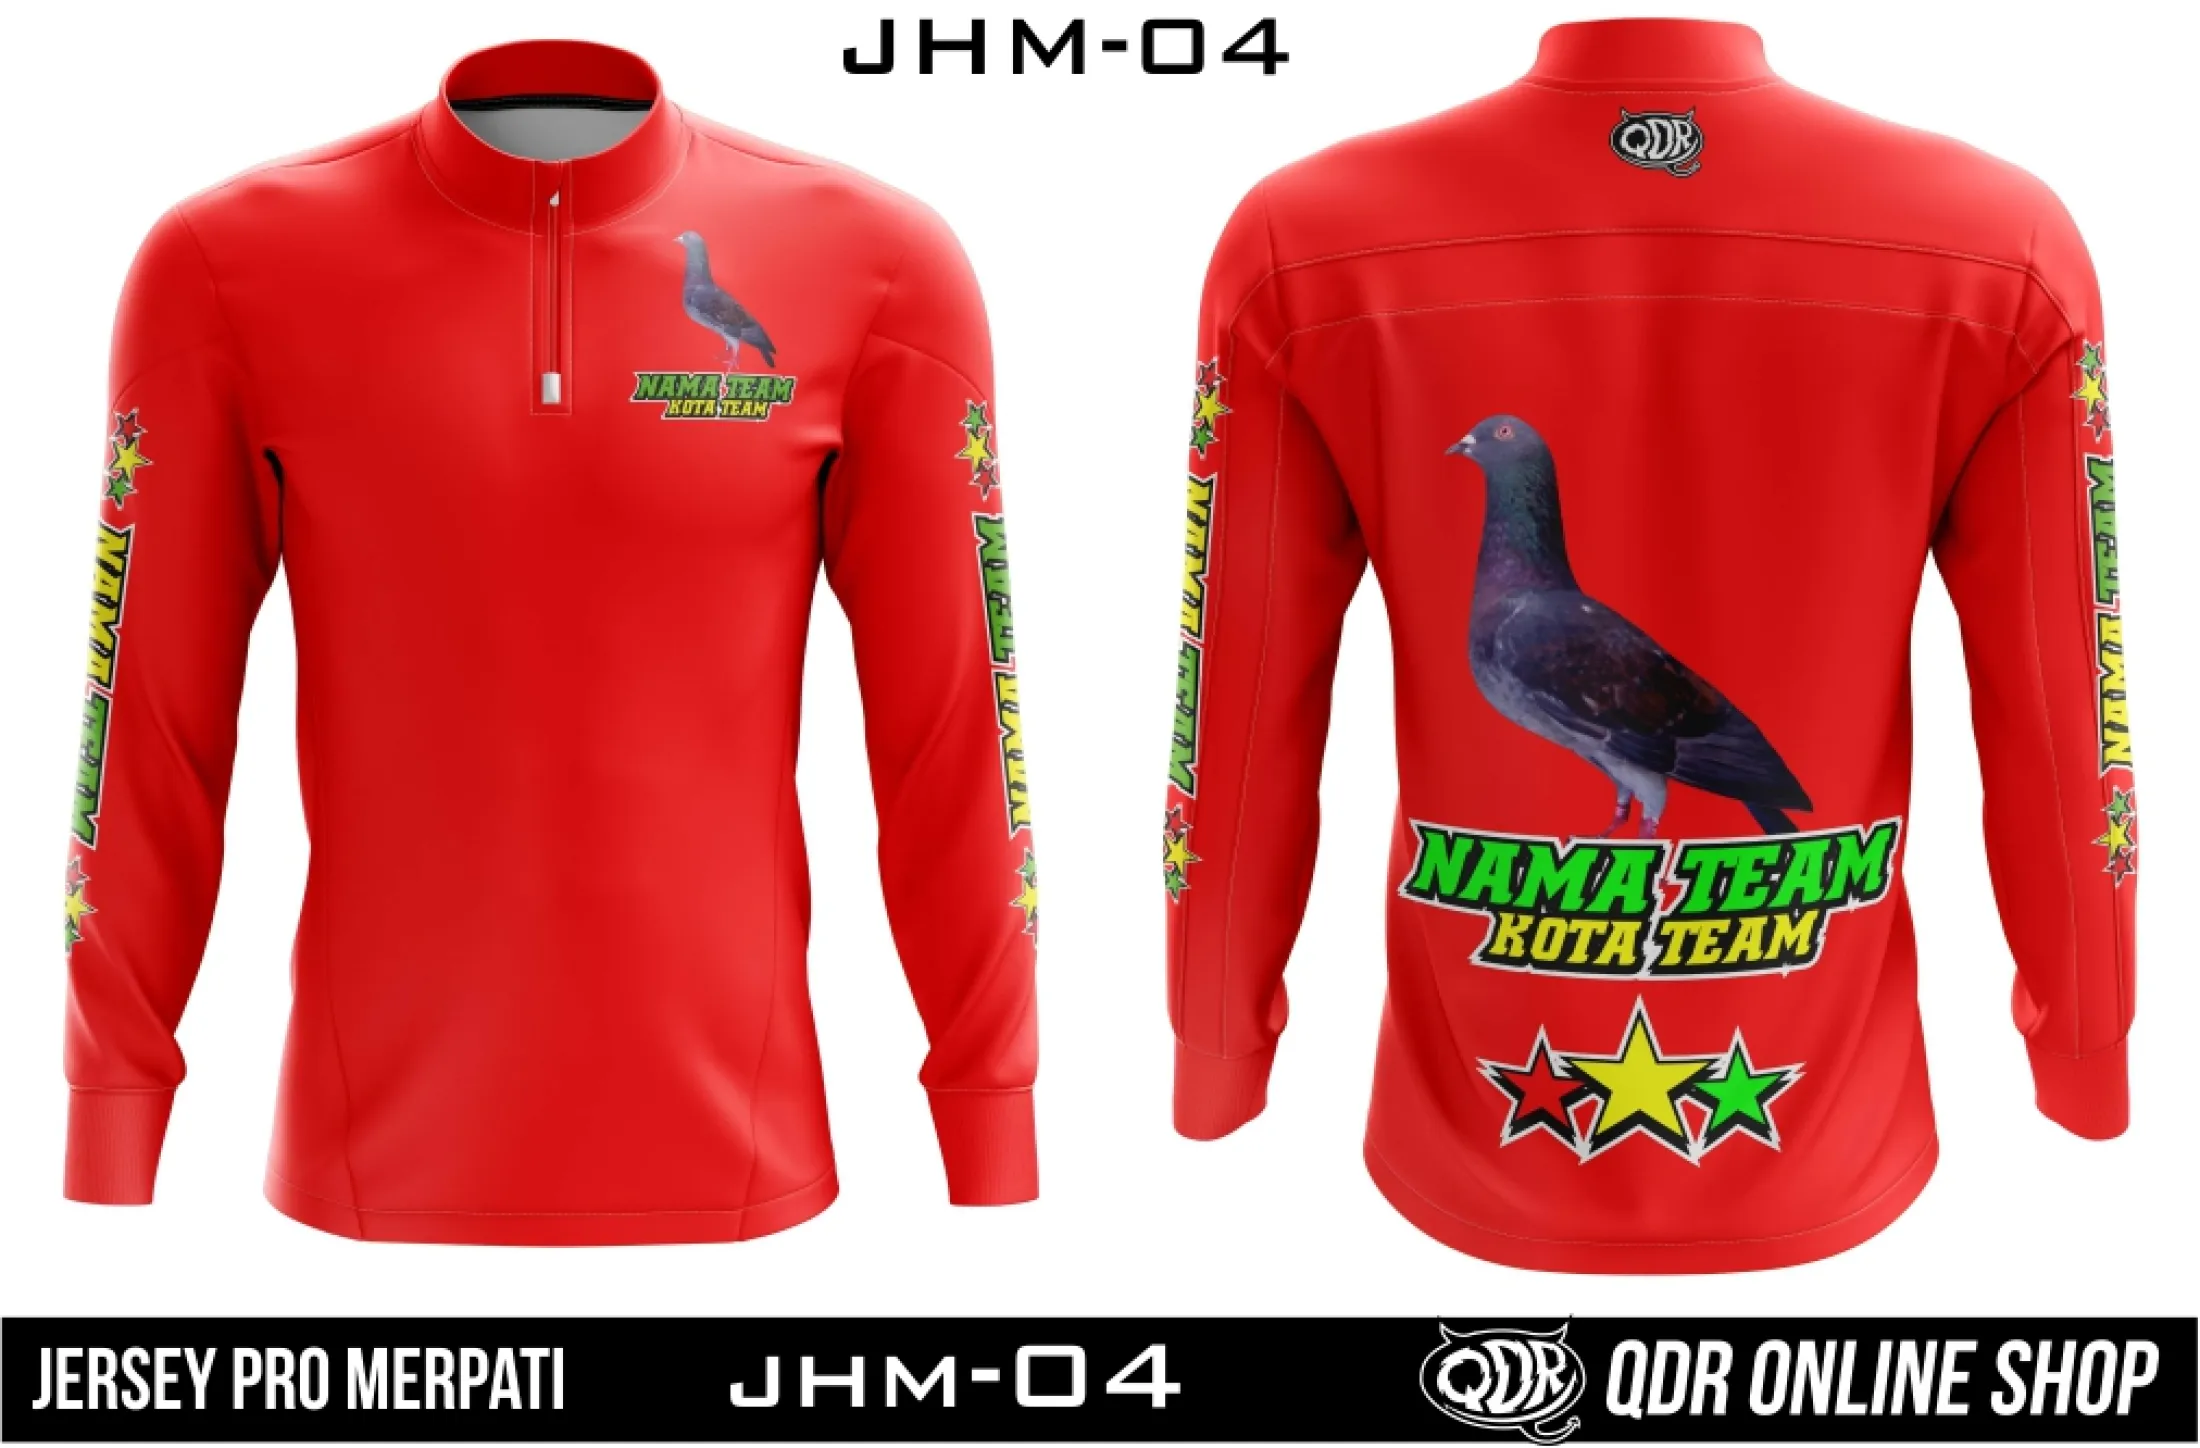 Jersey Merpati Costume Jersermurah Jersey Merpati 04 Free Nama Team Bisa Pake Logo Team Lazada Indonesia